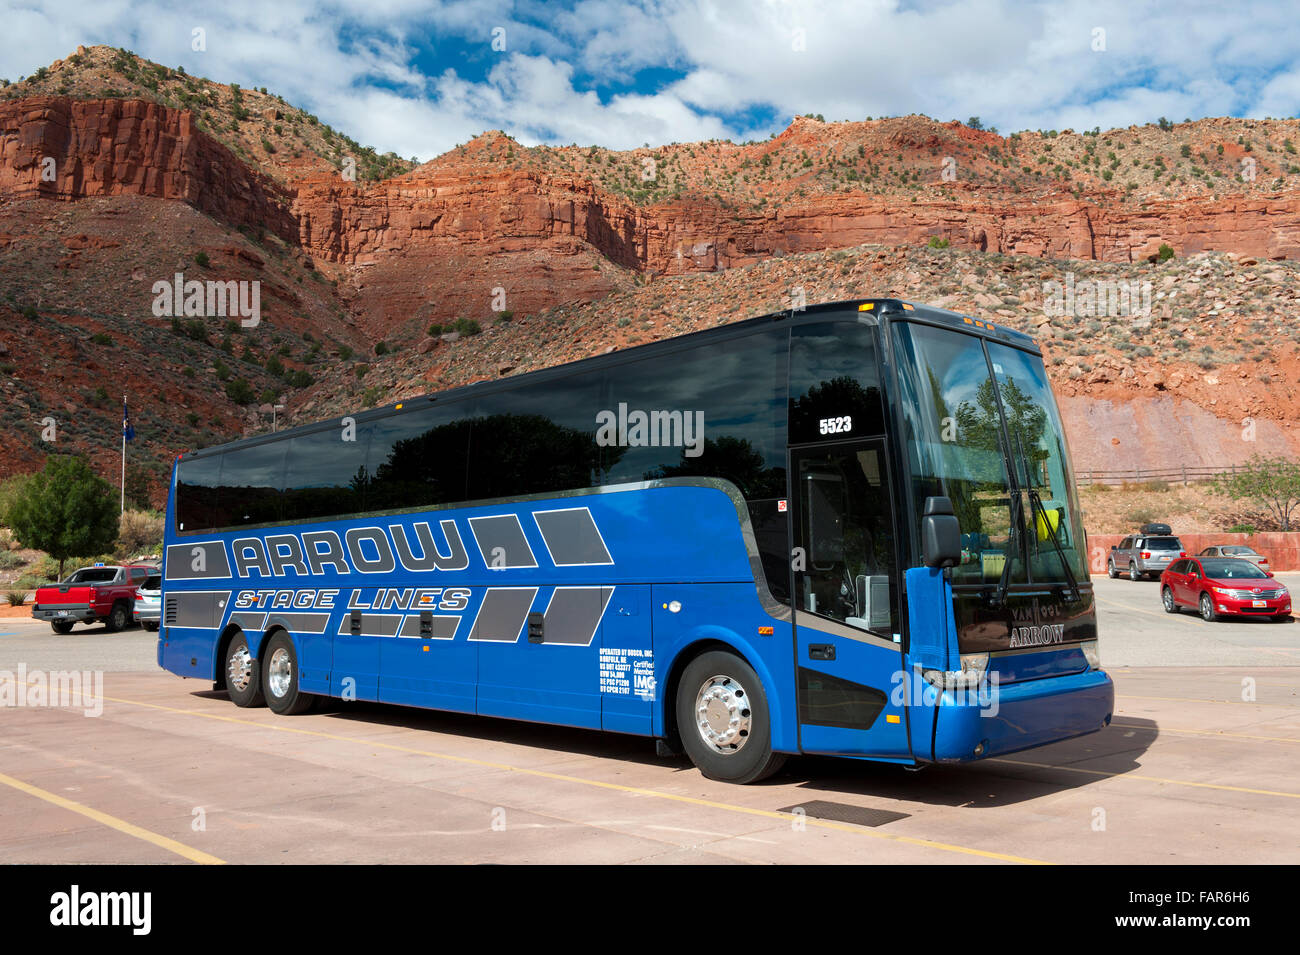 Tour-Bus auf Parkplatz am Zion Nationalpark, Utah, USA. Stockfoto